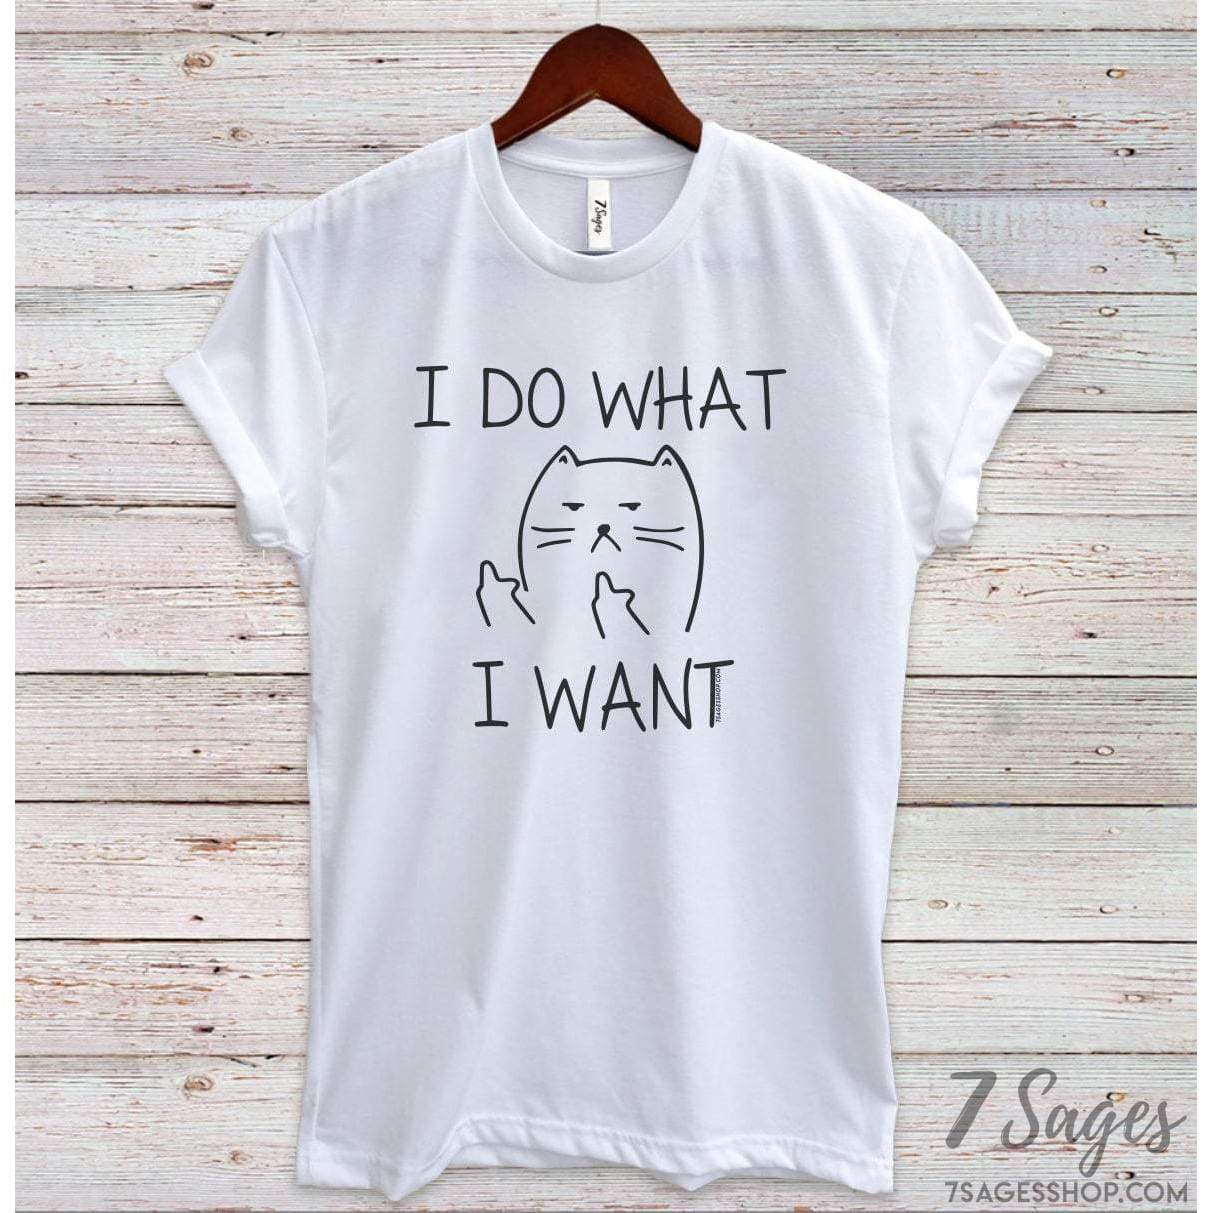 I Do What I Want Cat Shirt - Cat T Shirt - Cat Lovers Gift - Funny Cat Shirt - Cat Lovers Gift - Gift for Cat Lovers